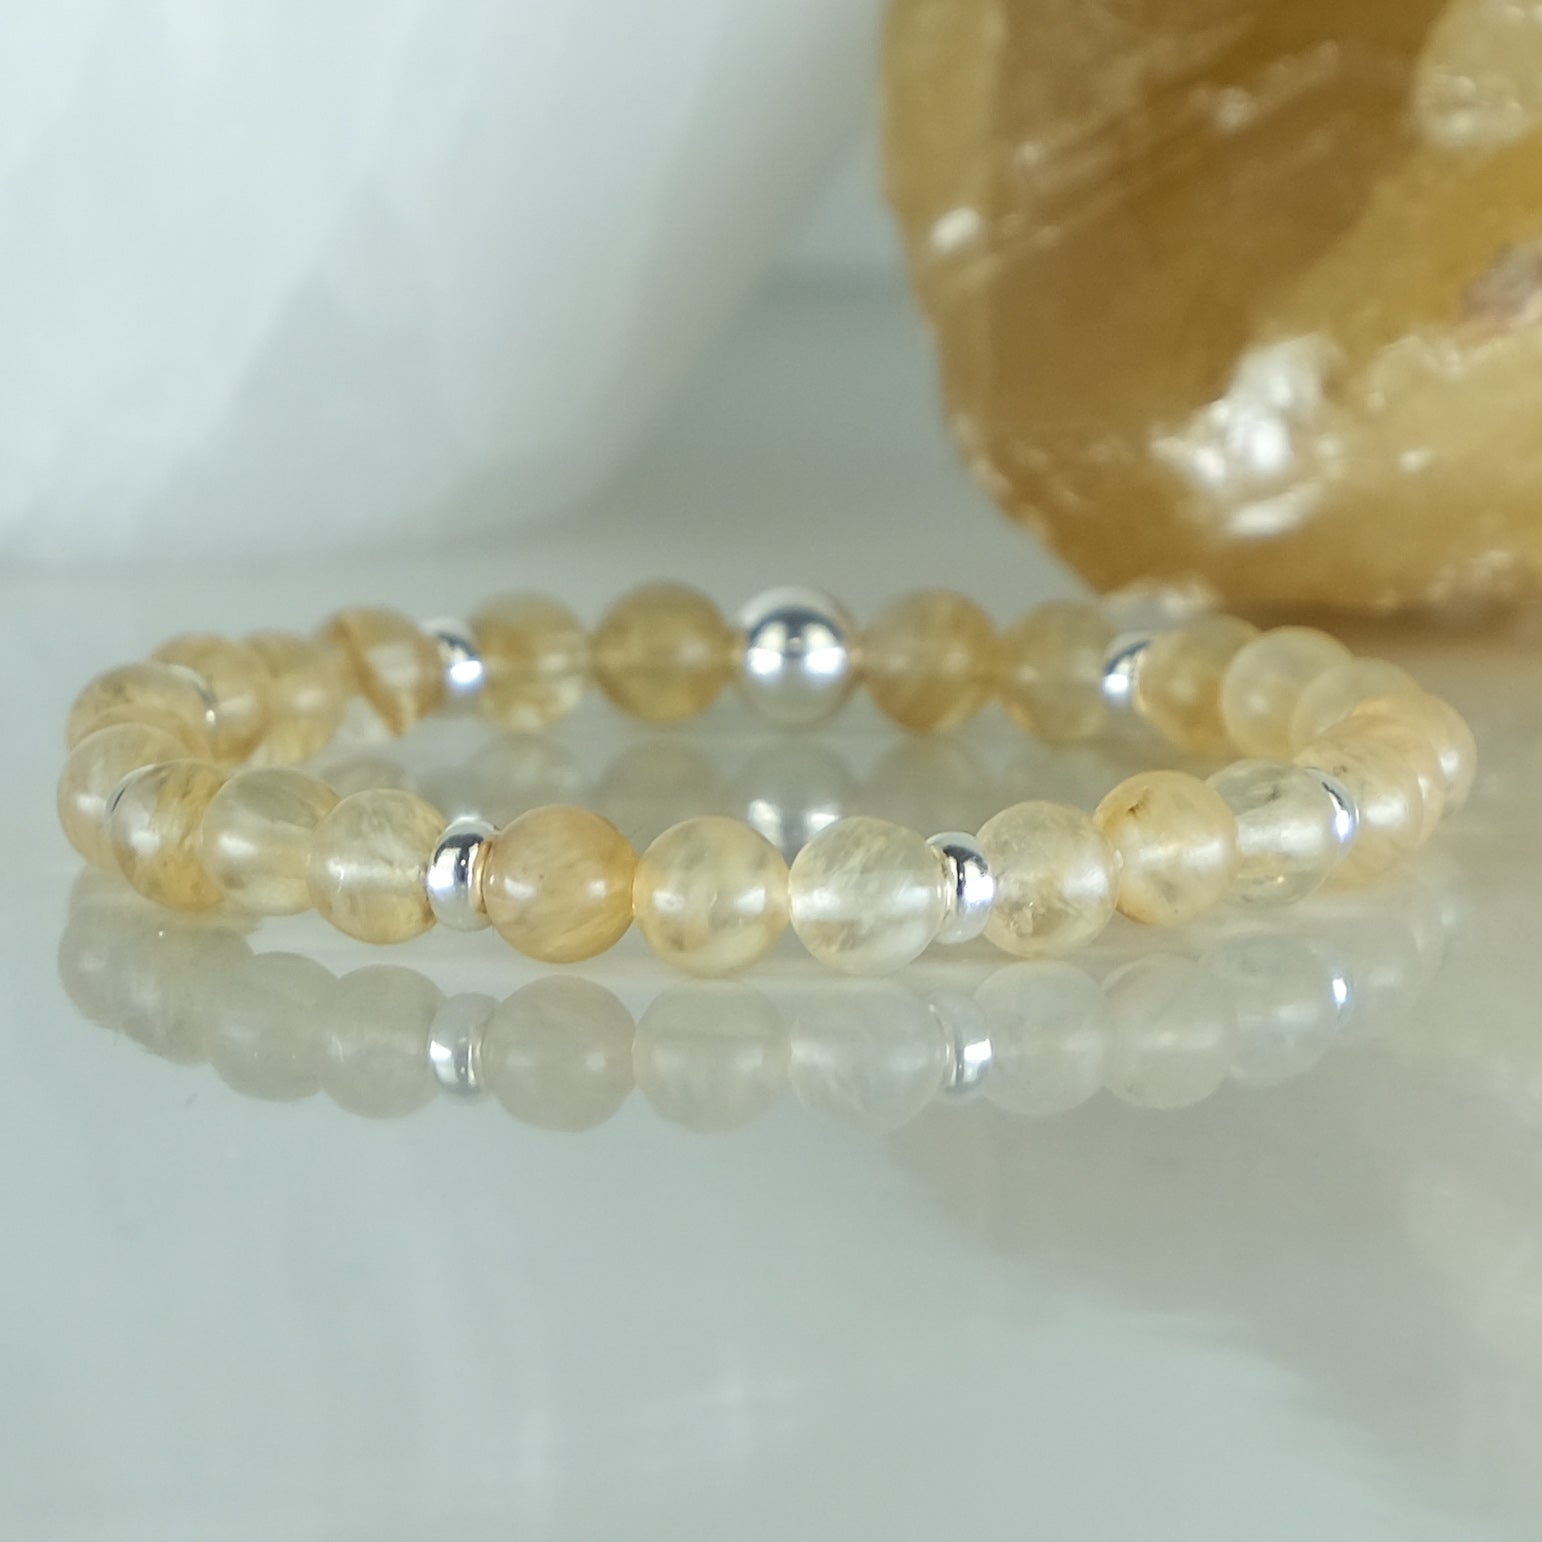 6mm golden quartz healer gemstone bracelet with silver accents